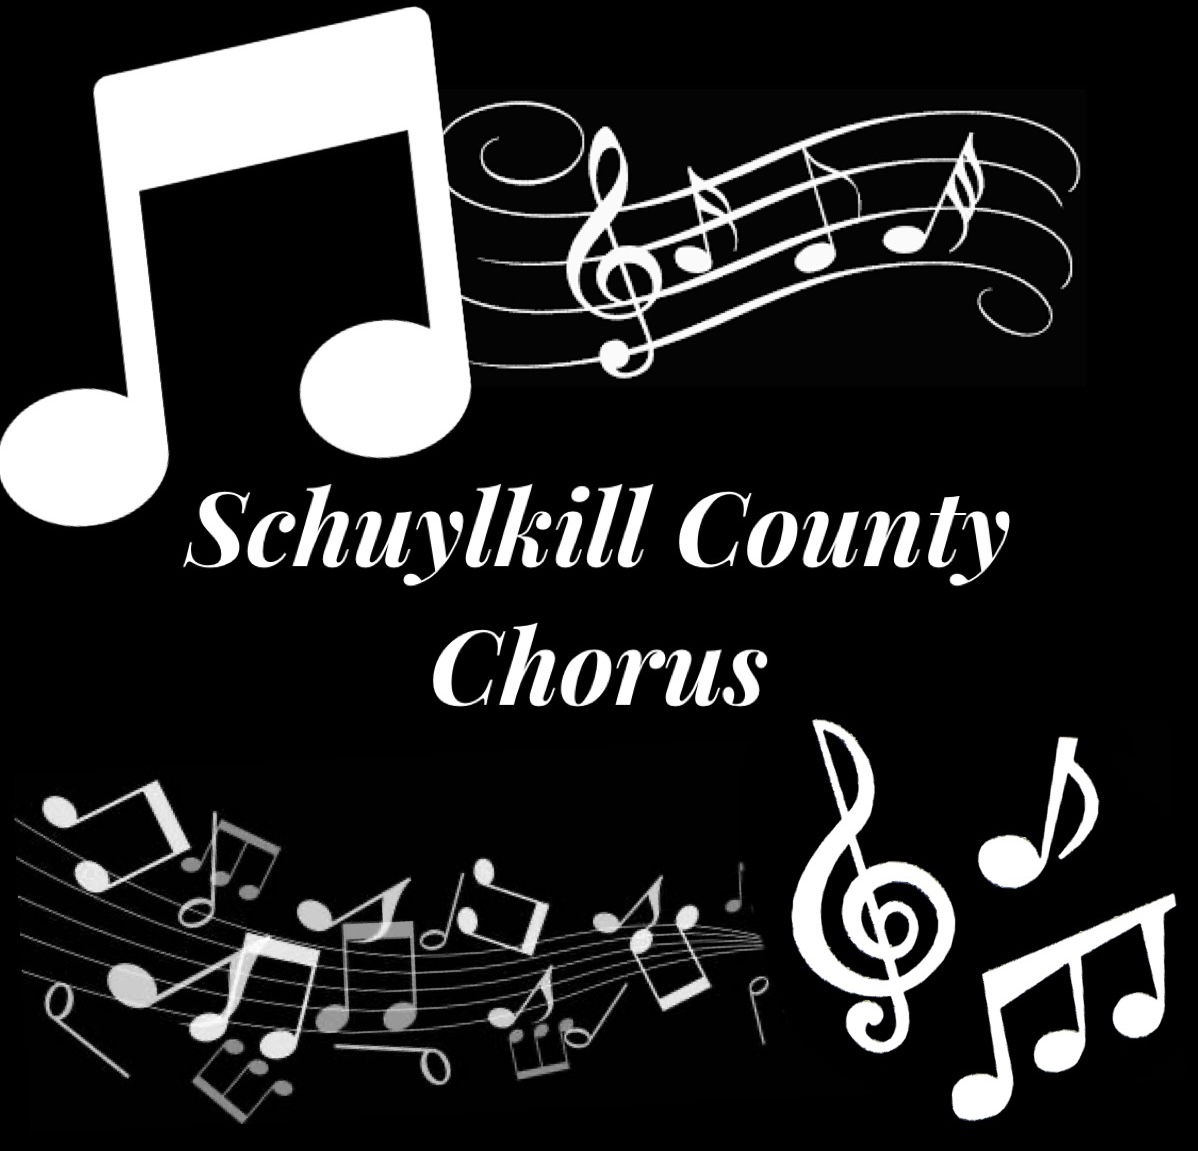 An+artistic+rendition+of+Schuylkill+County+Chorus+made+through+a+digital+medium.